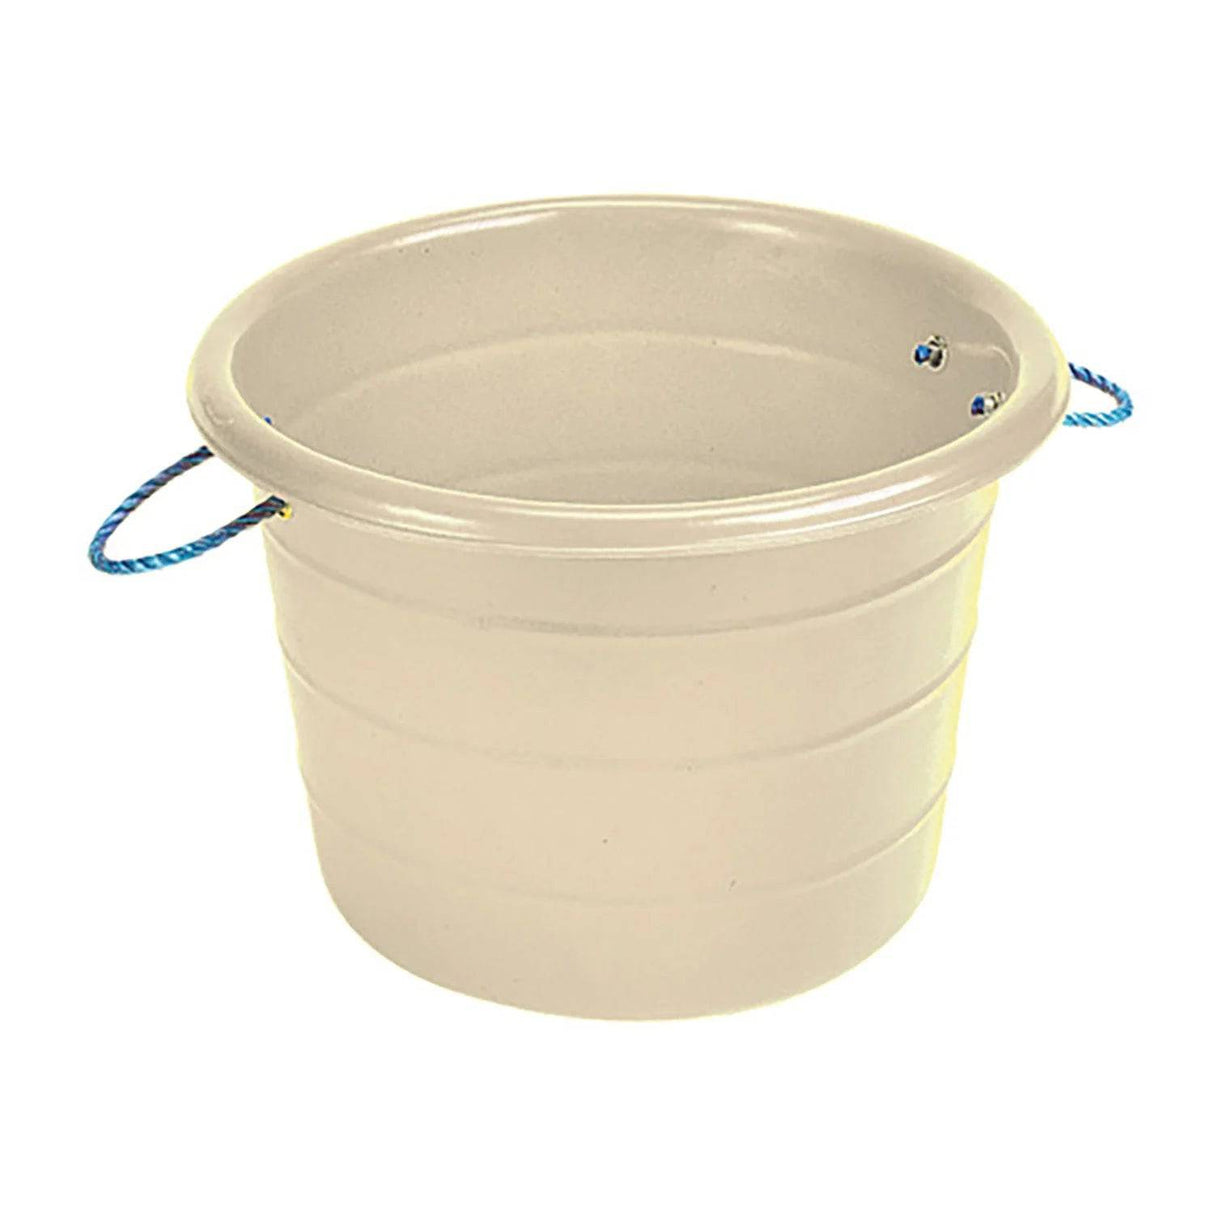 STUBBS Large Manure / Water Buckets Buckets & Bowls Red Barnstaple Equestrian Supplies